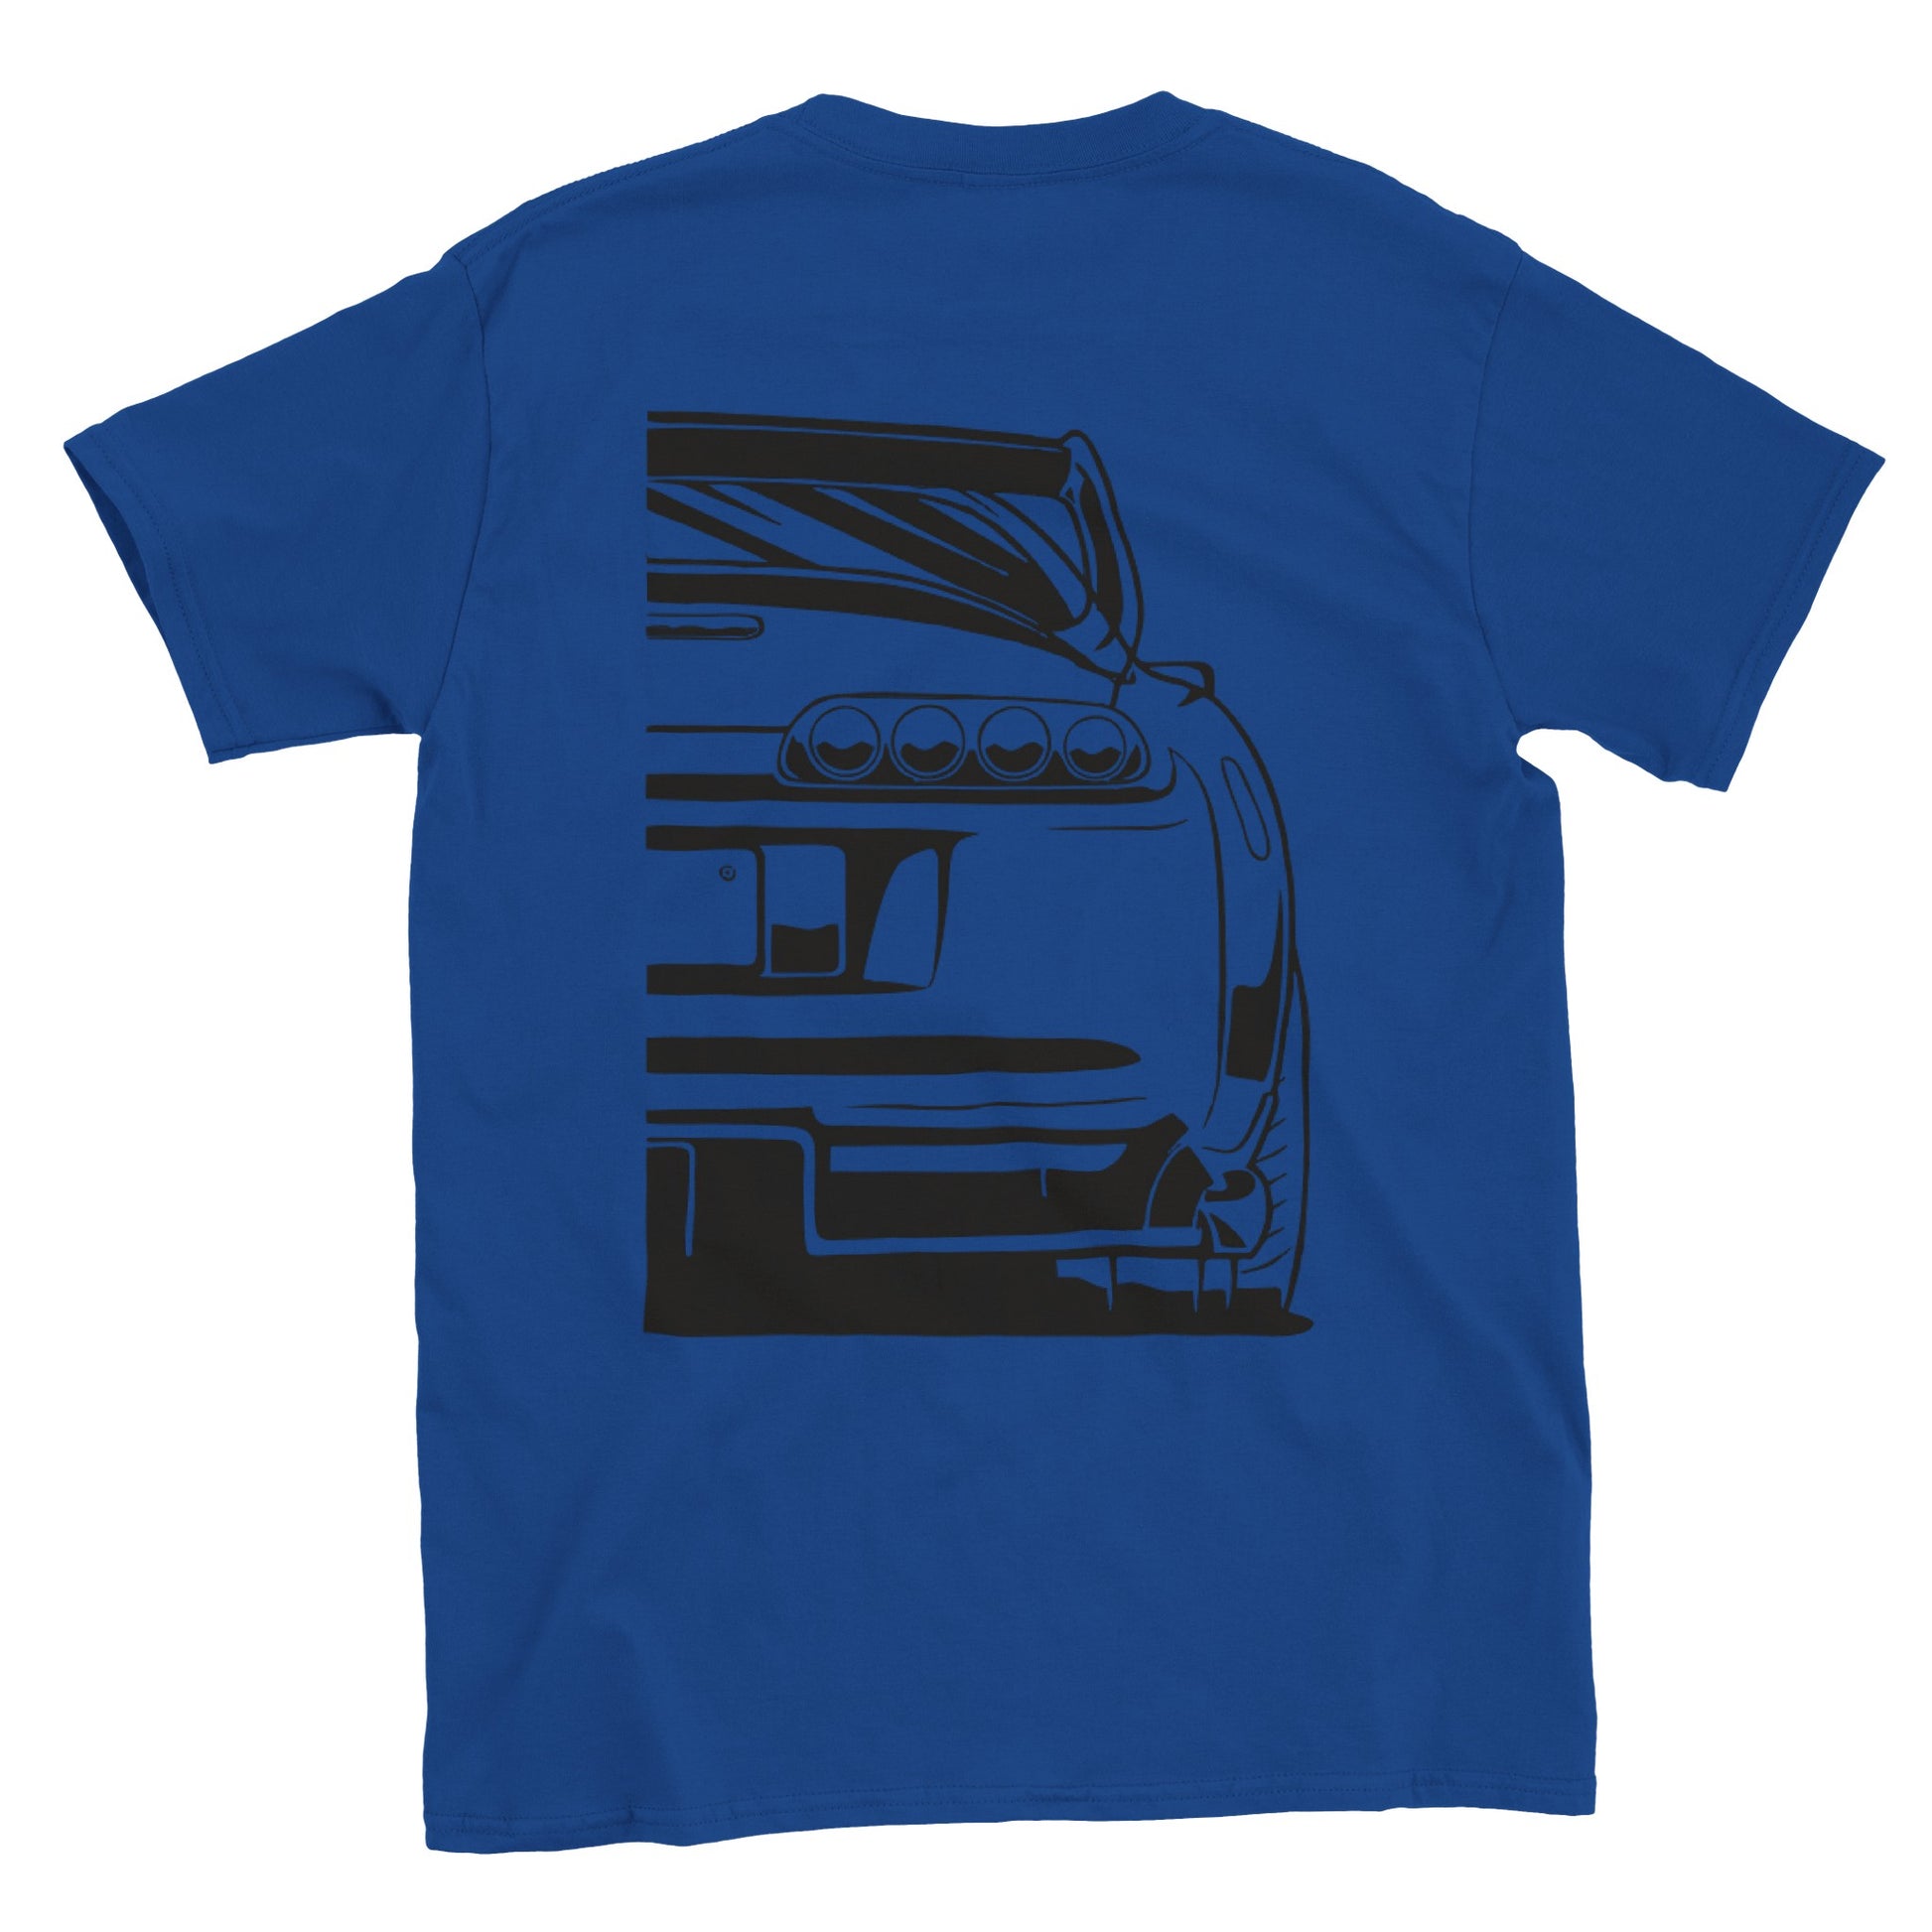 JDM Cars - Street Racer - Classic Unisex Crewneck T-shirt - Mister Snarky's